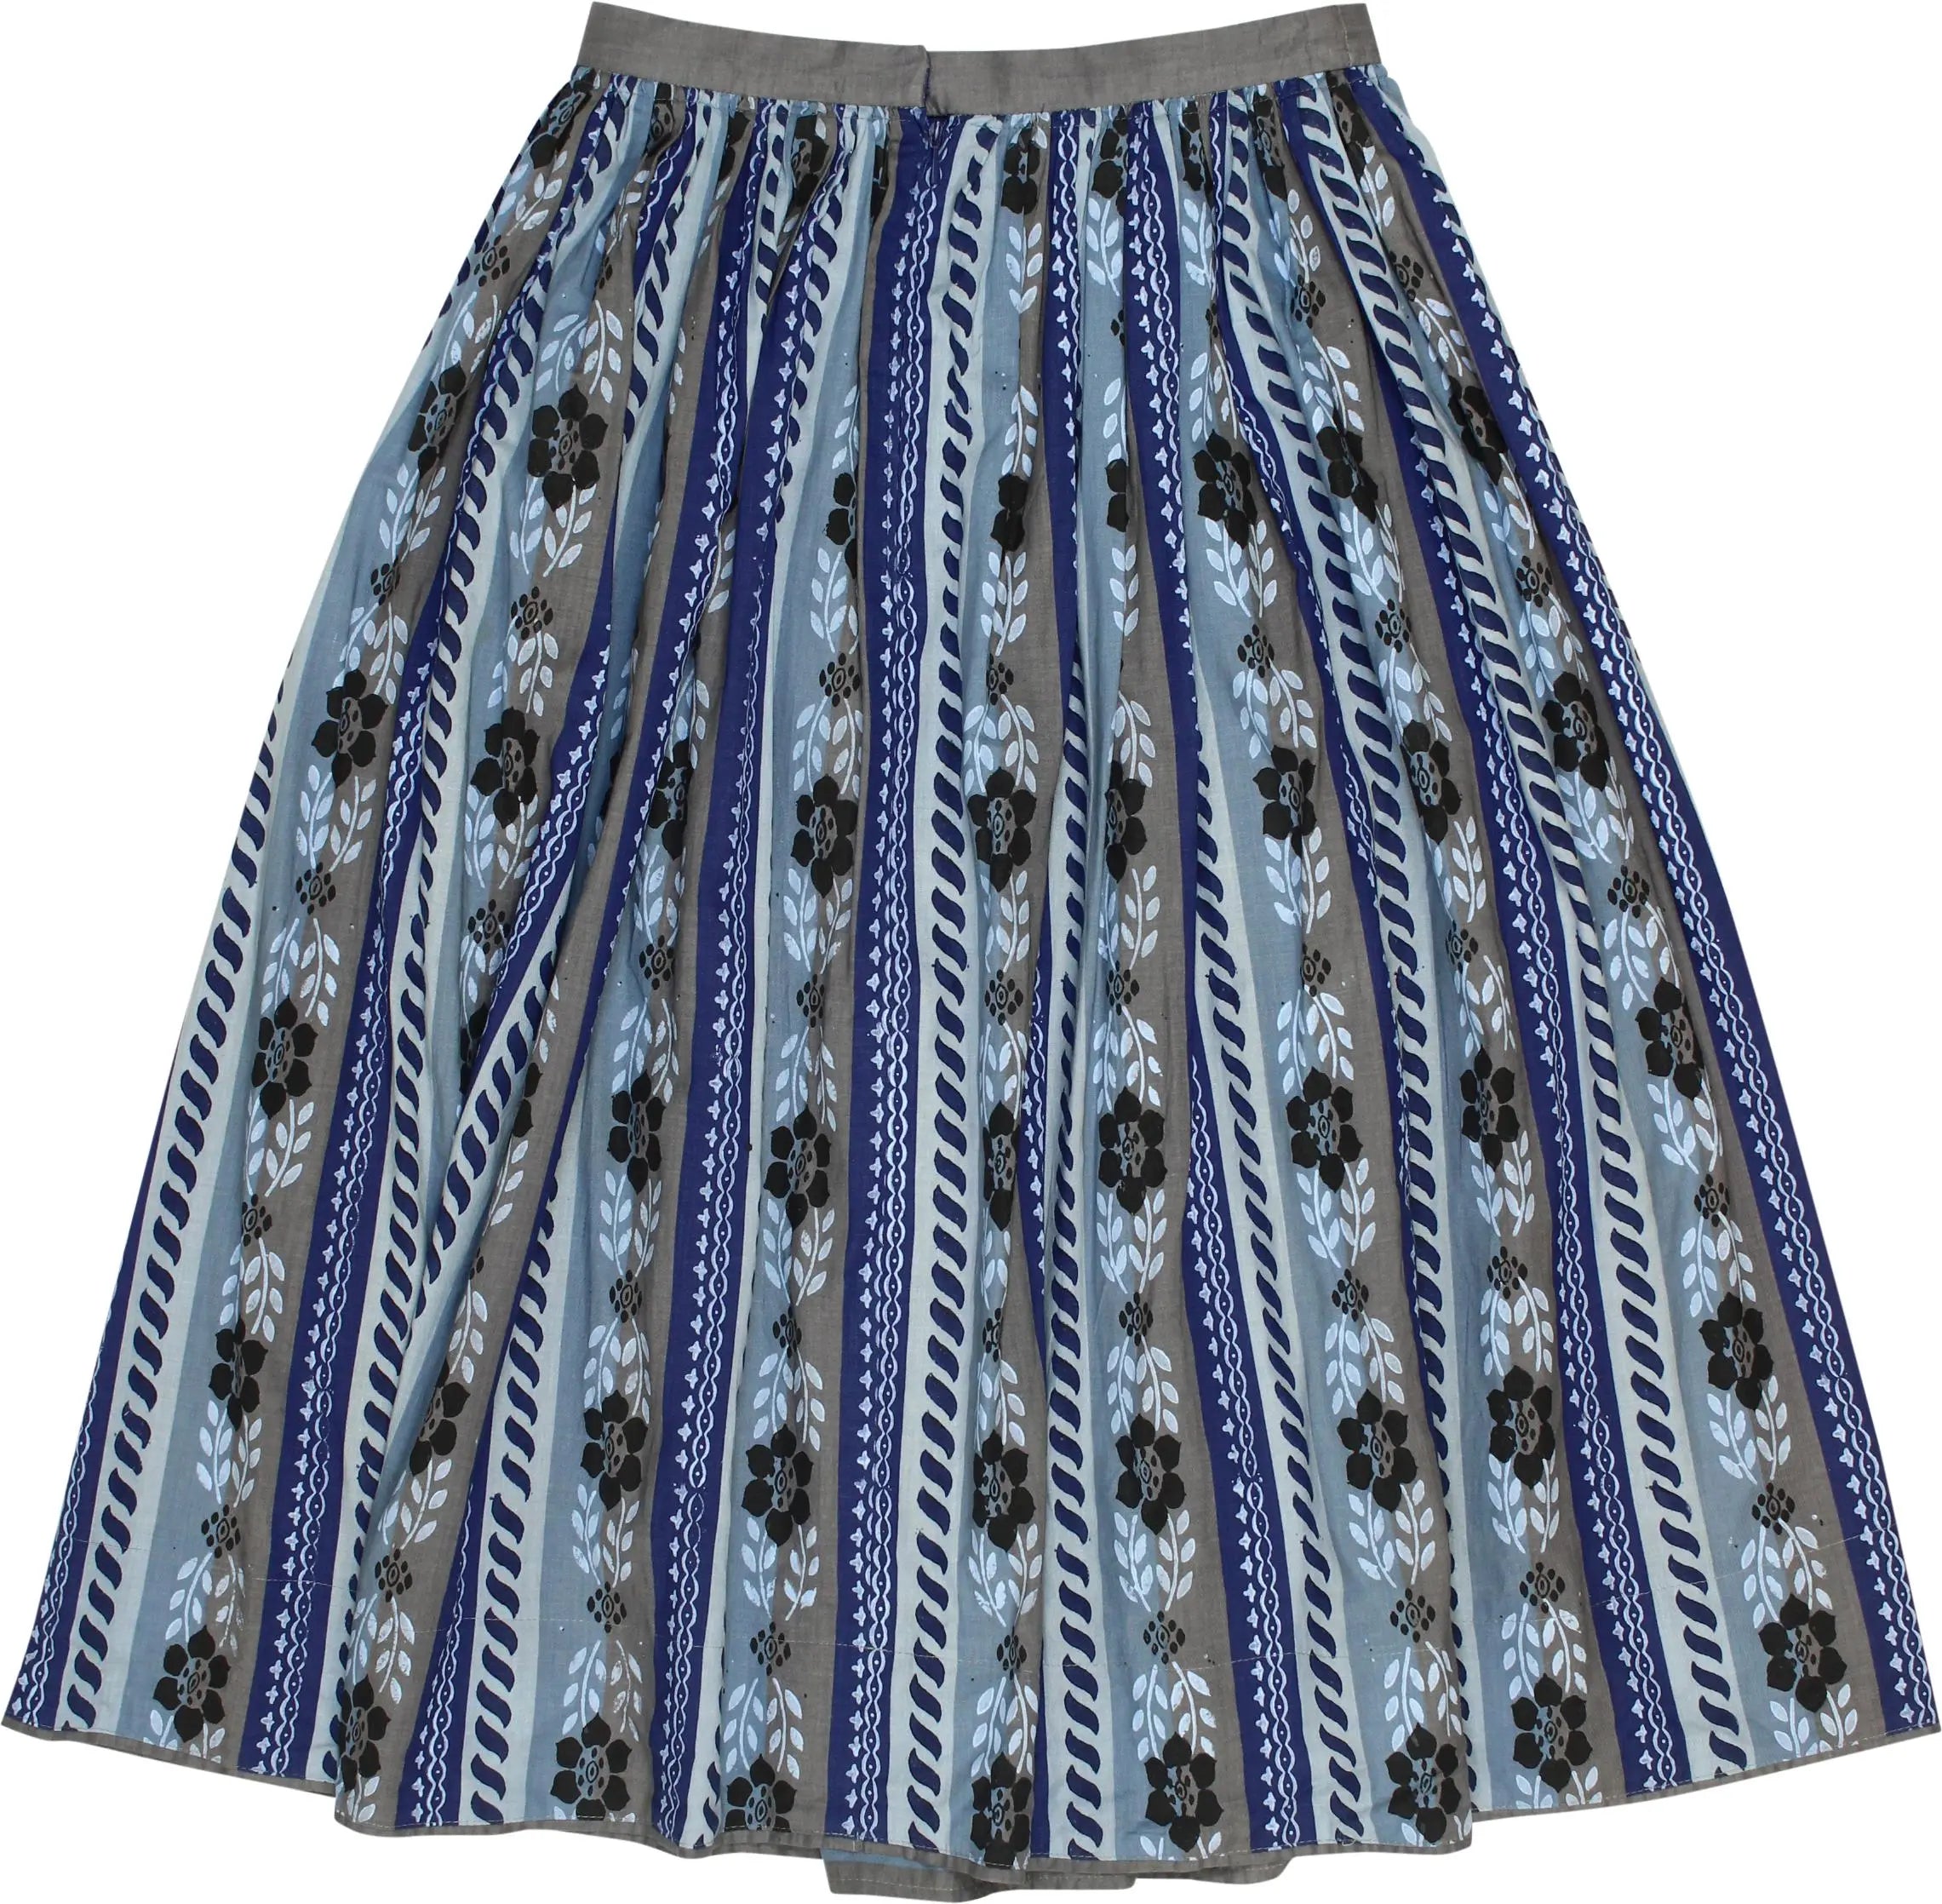 Hansi Trachten - 80s Blue Patterned Skirt- ThriftTale.com - Vintage and second handclothing